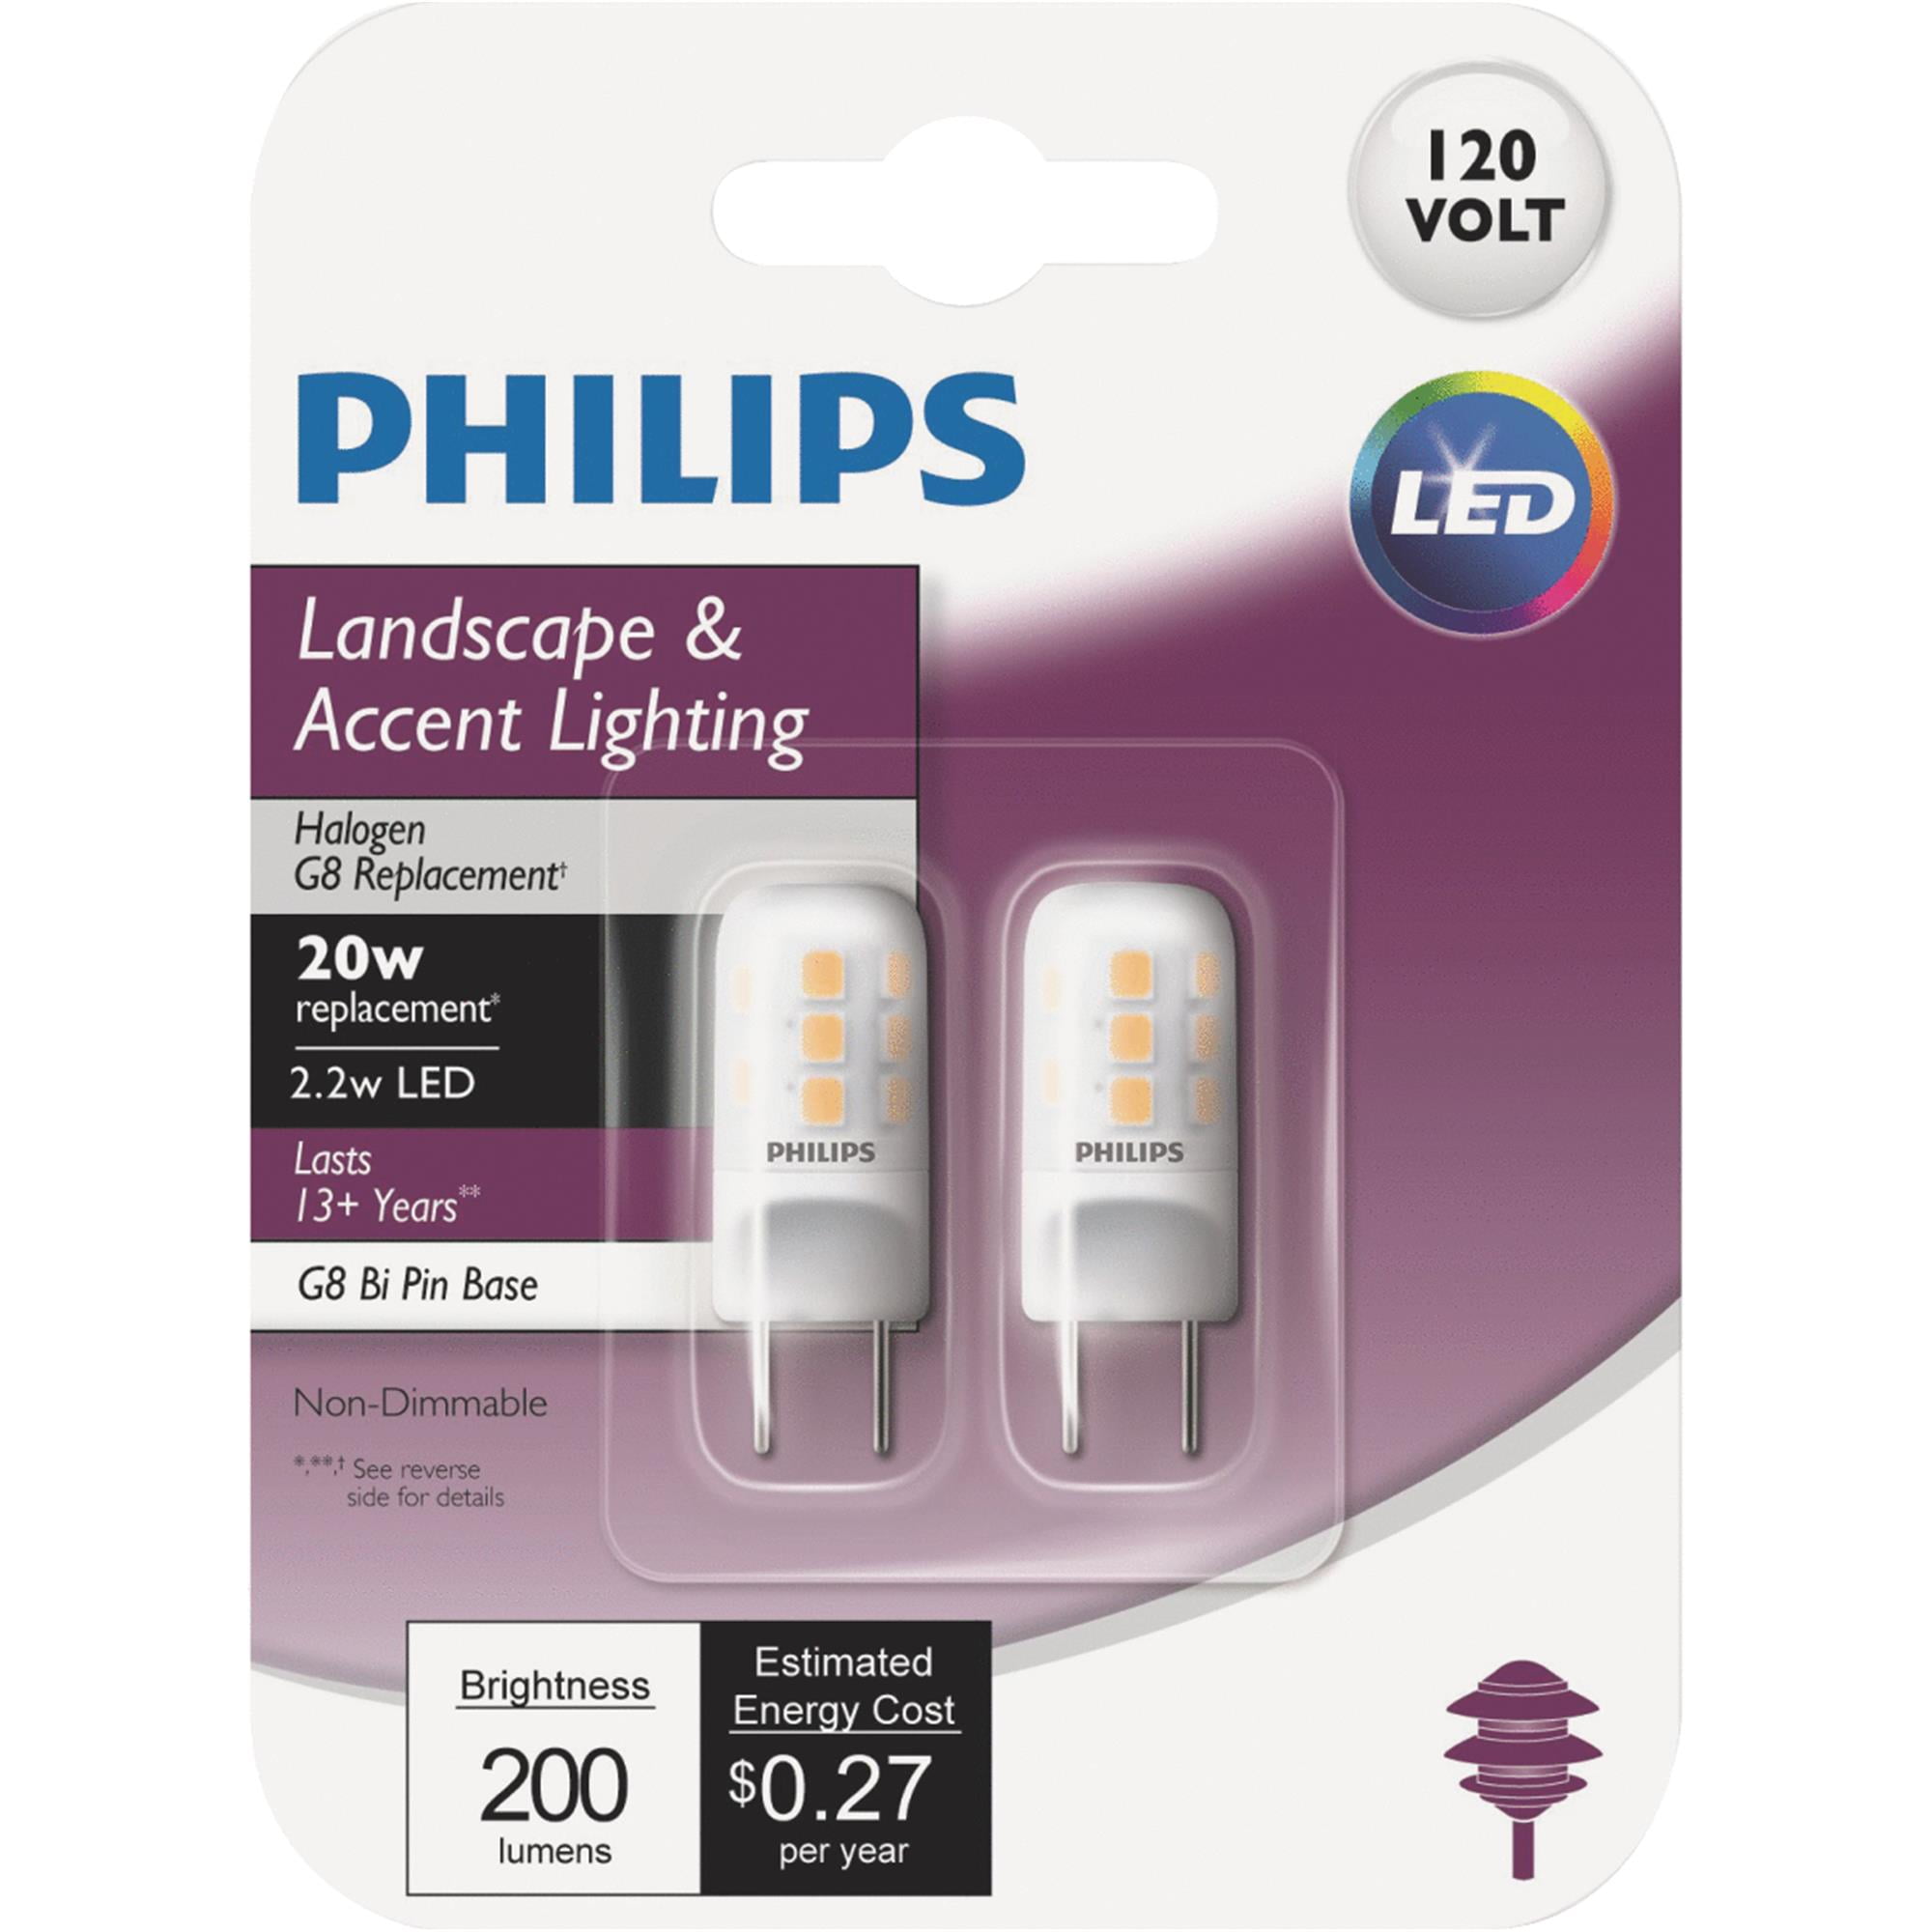 Philips LED 20-Watt T4 Bi-Pin Landscape & Accent Light Bulb, Non-Dimmable, G8 Bi Pin Base (2-Pack) -